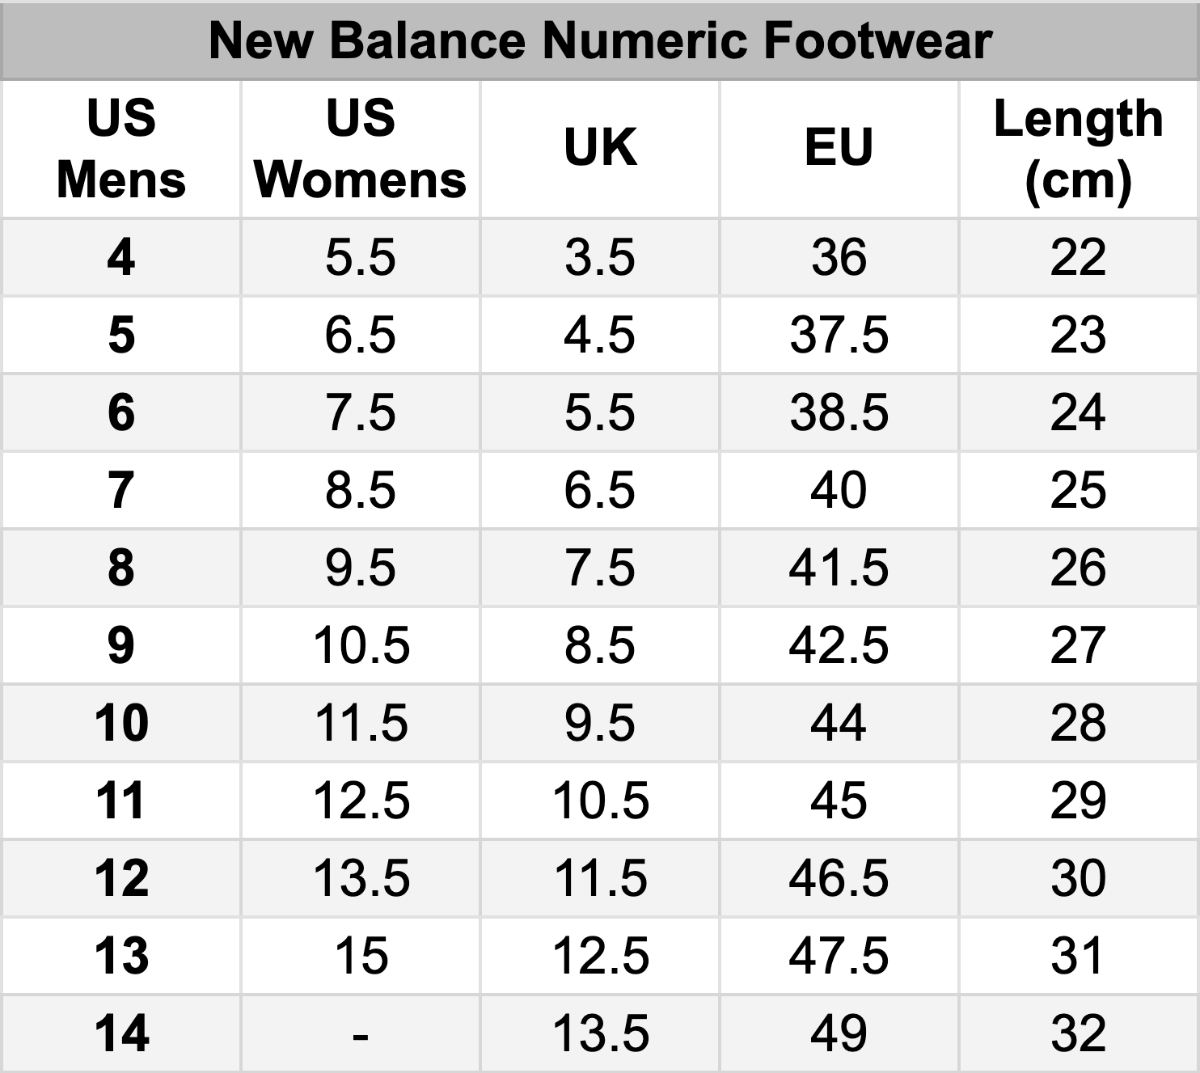 New Balance Numeric Footwear